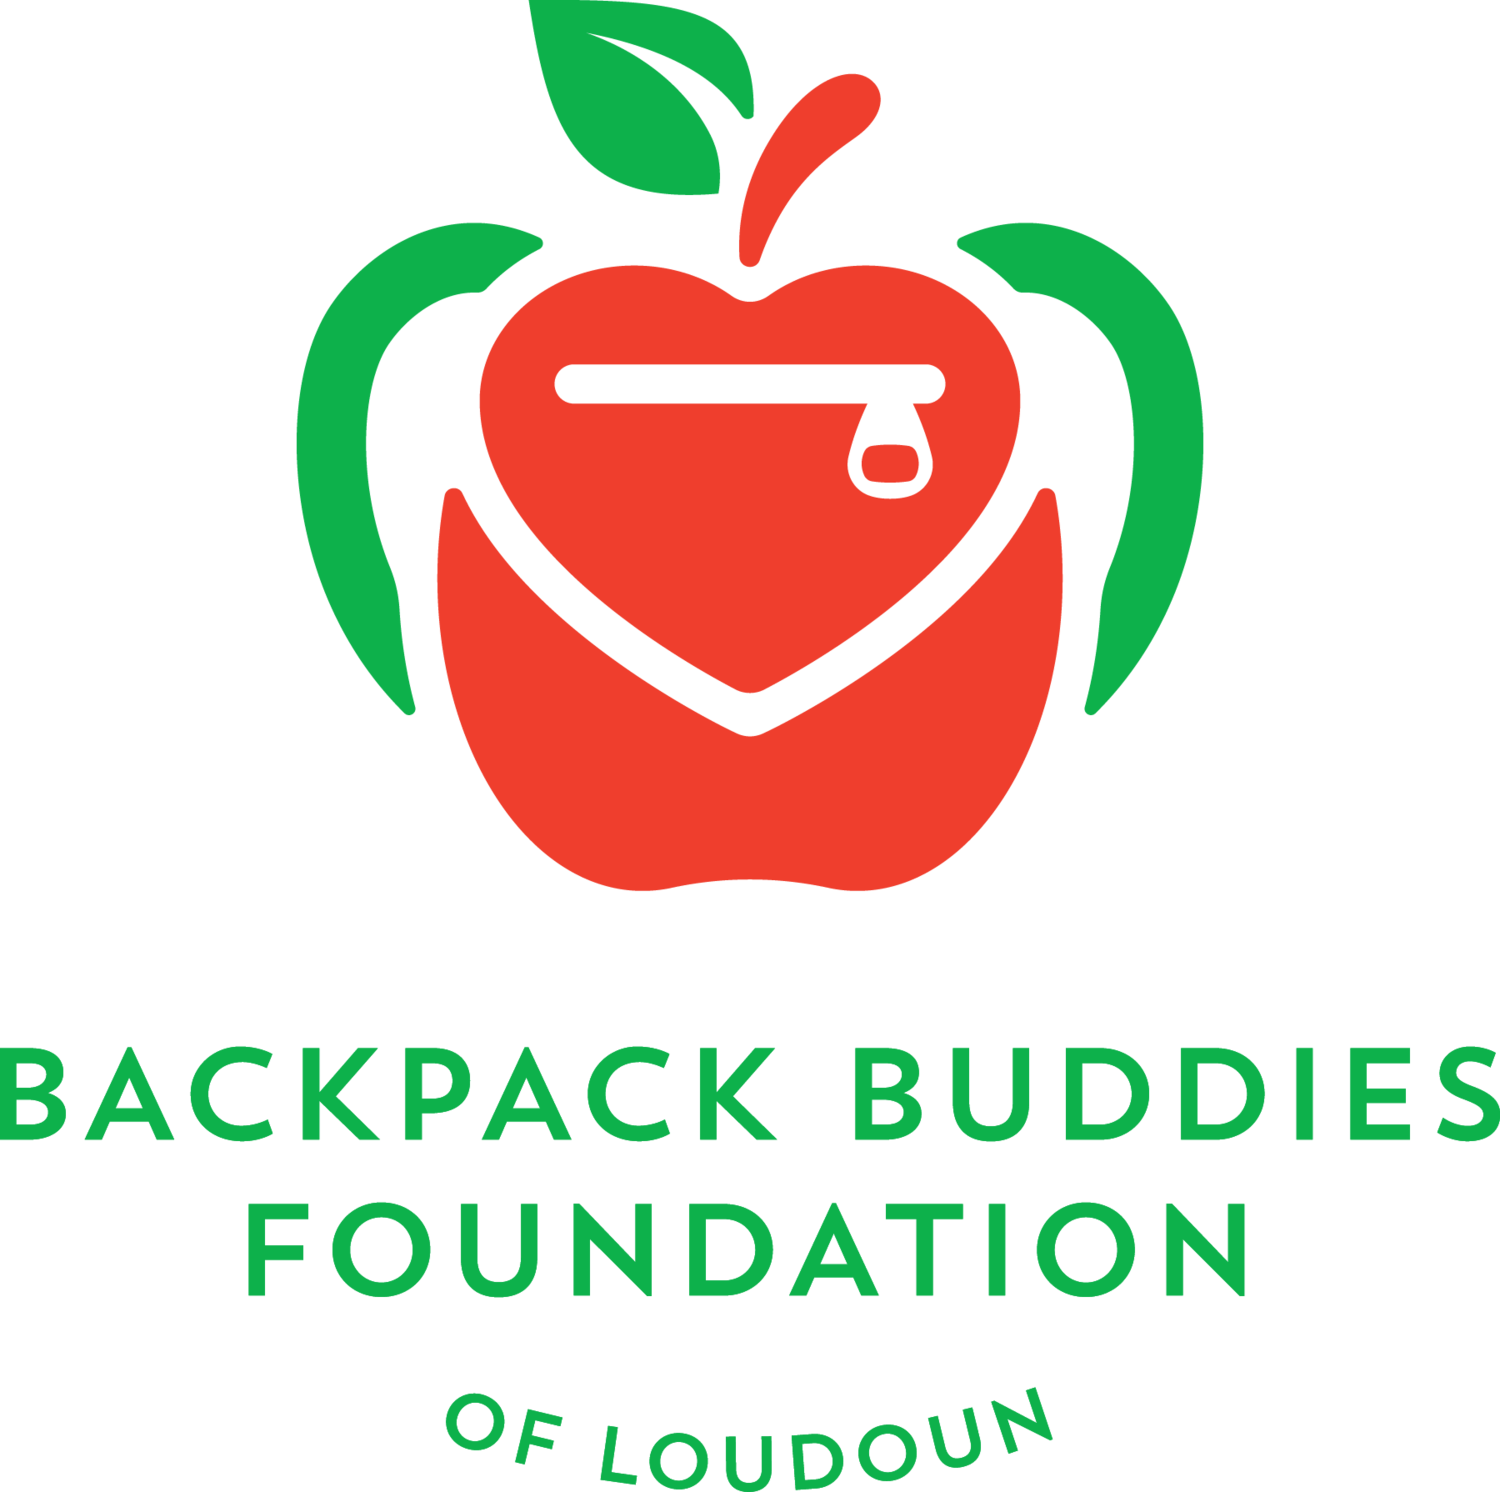 Backpack Buddies Foundation of Loudoun